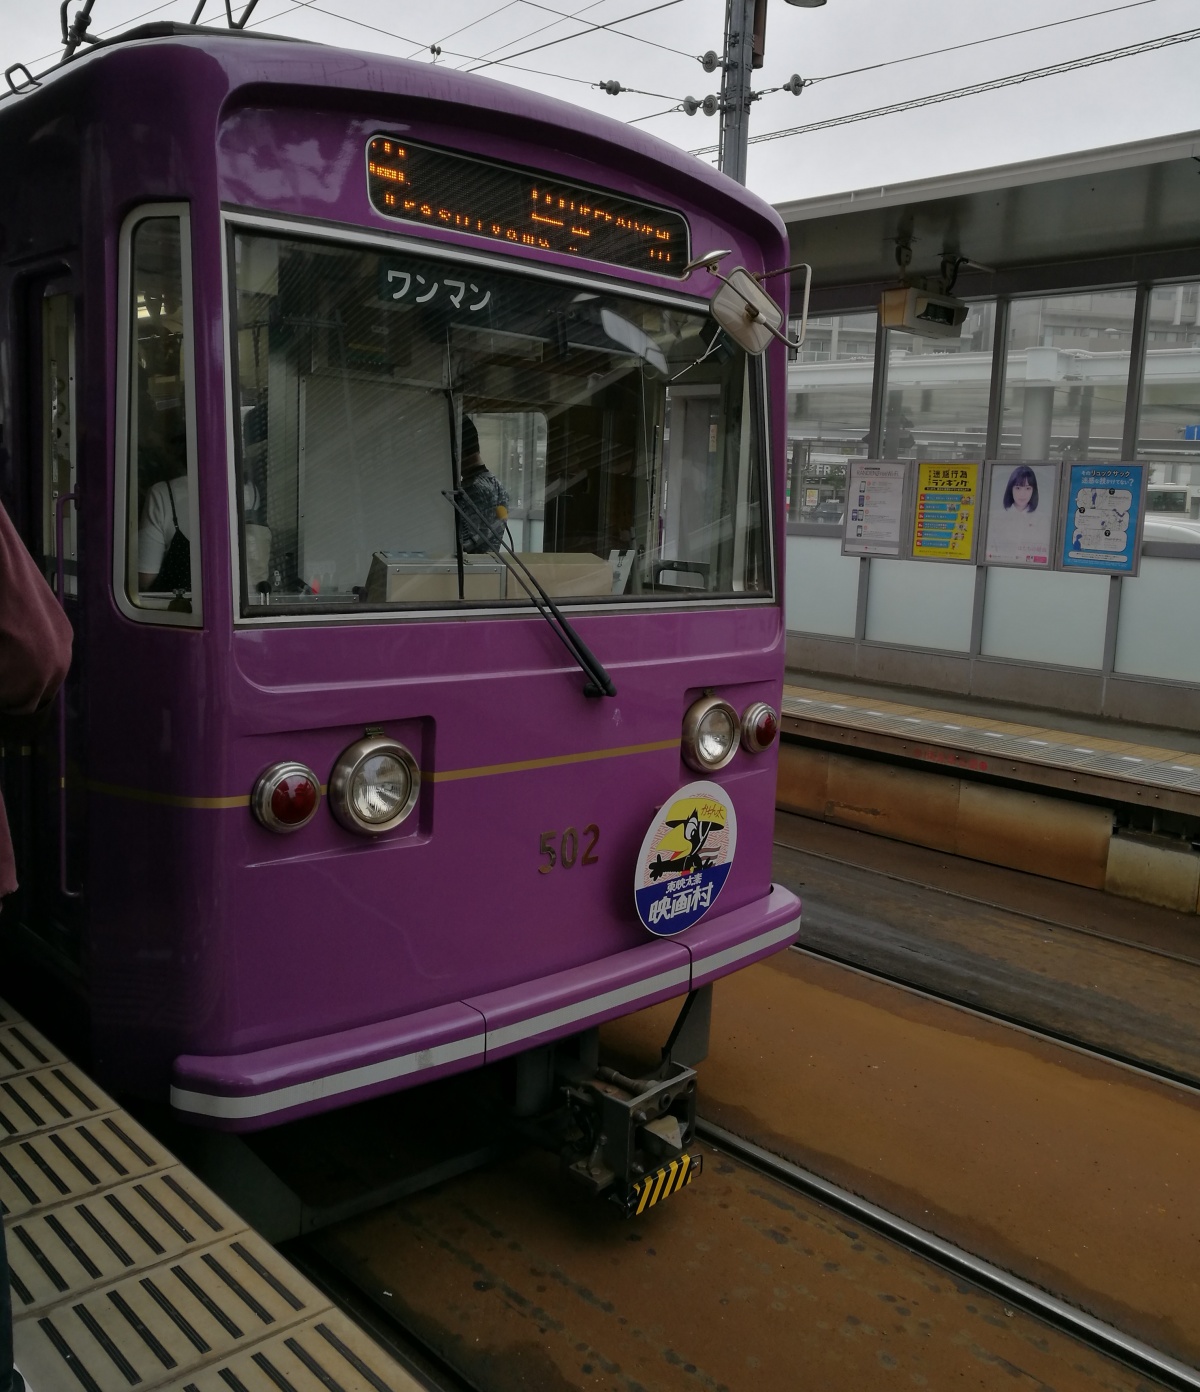 5. Travel via the Purple Tram